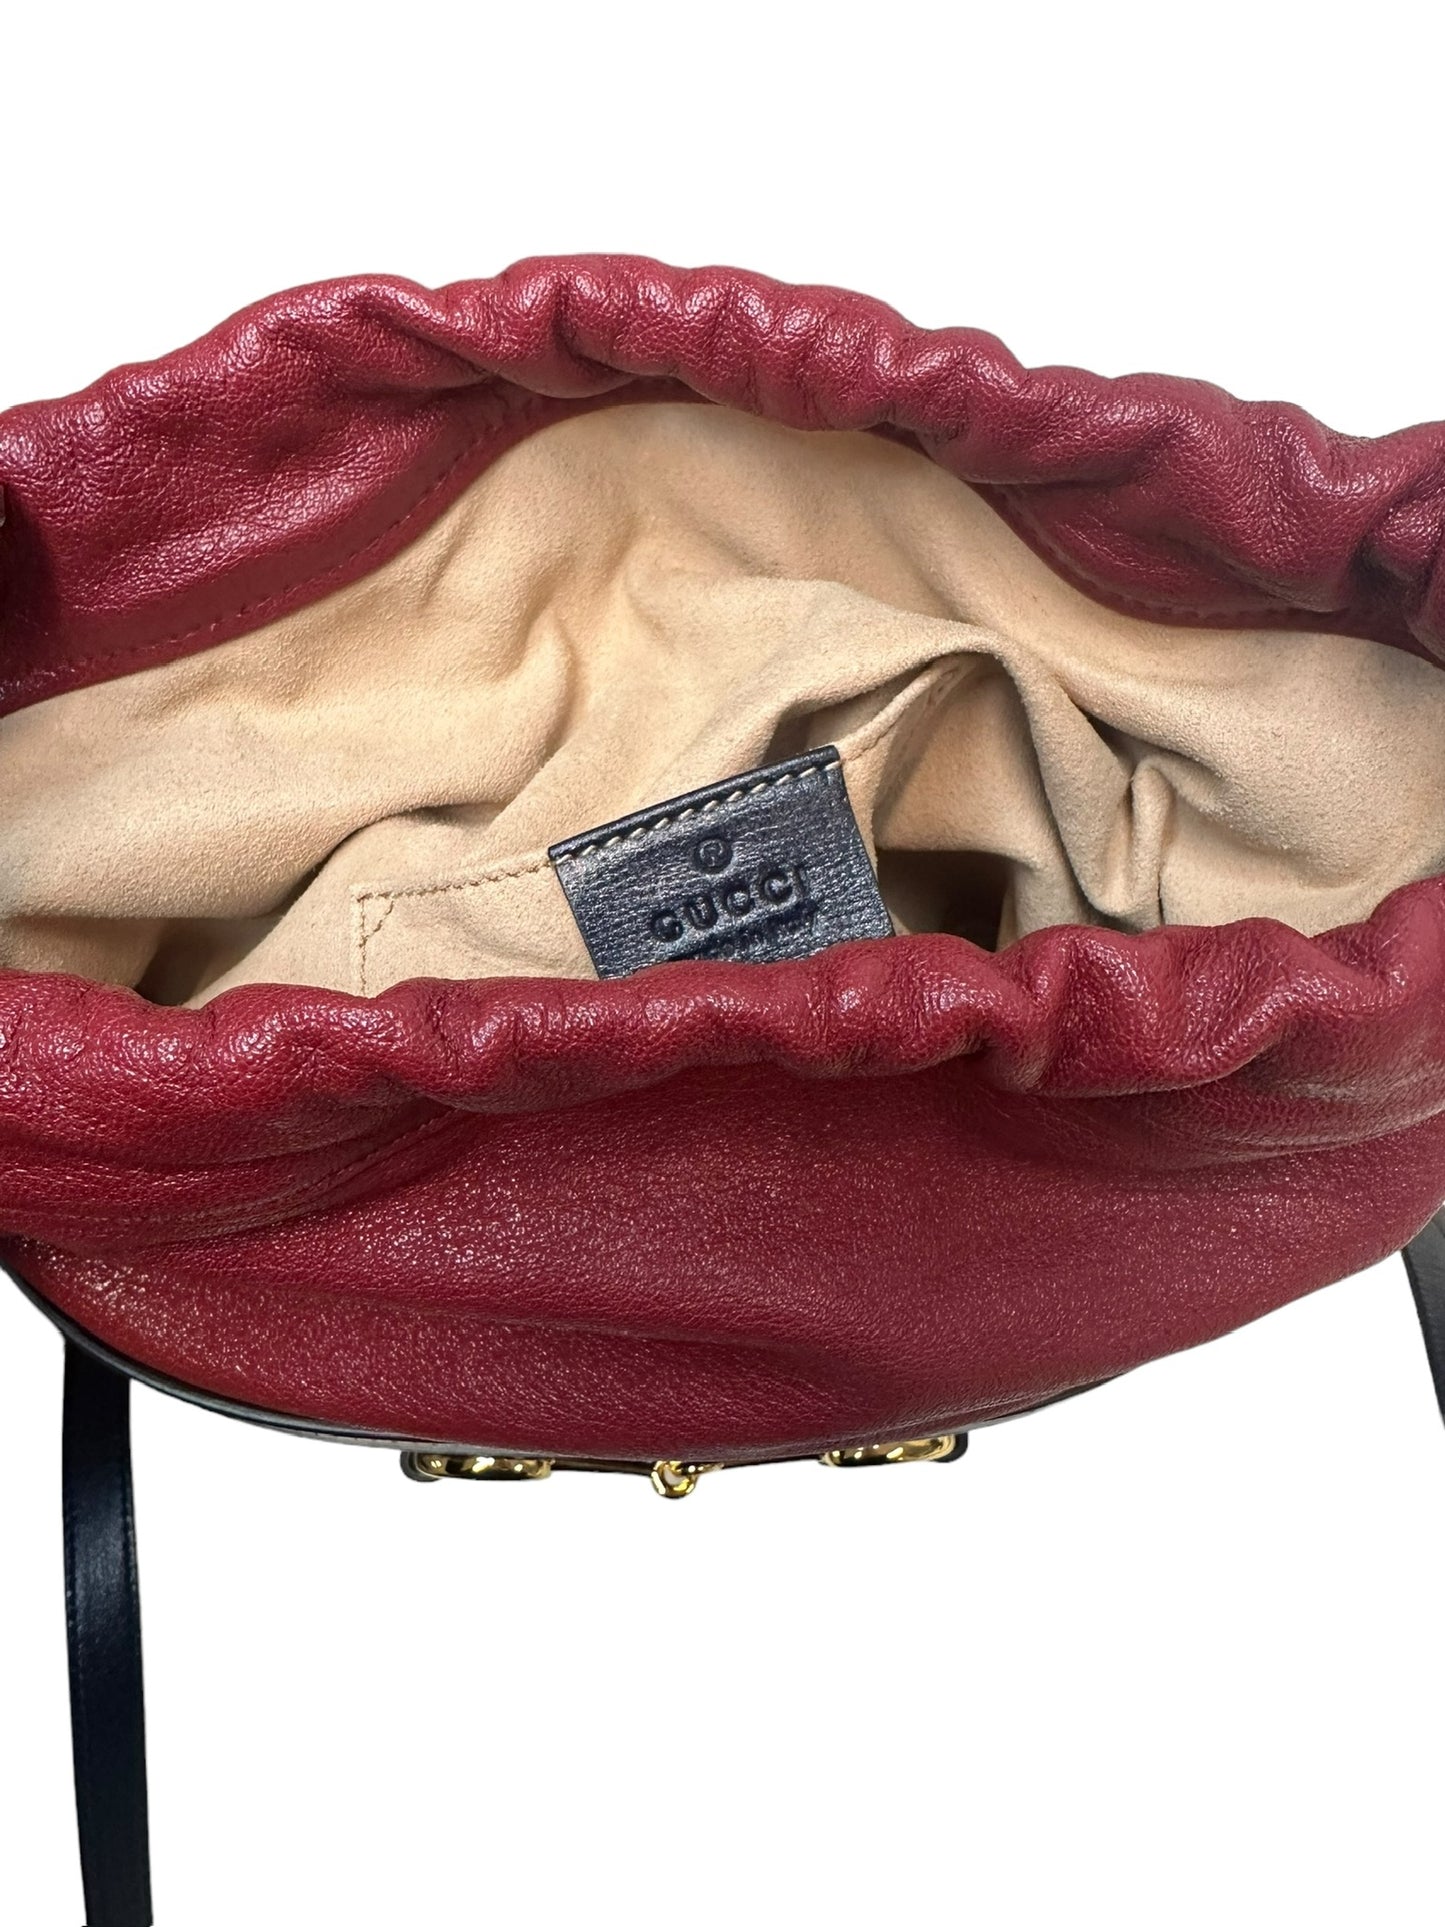 GUCCI - Navy Red Leather 1955 Horsebit Bucket Bag